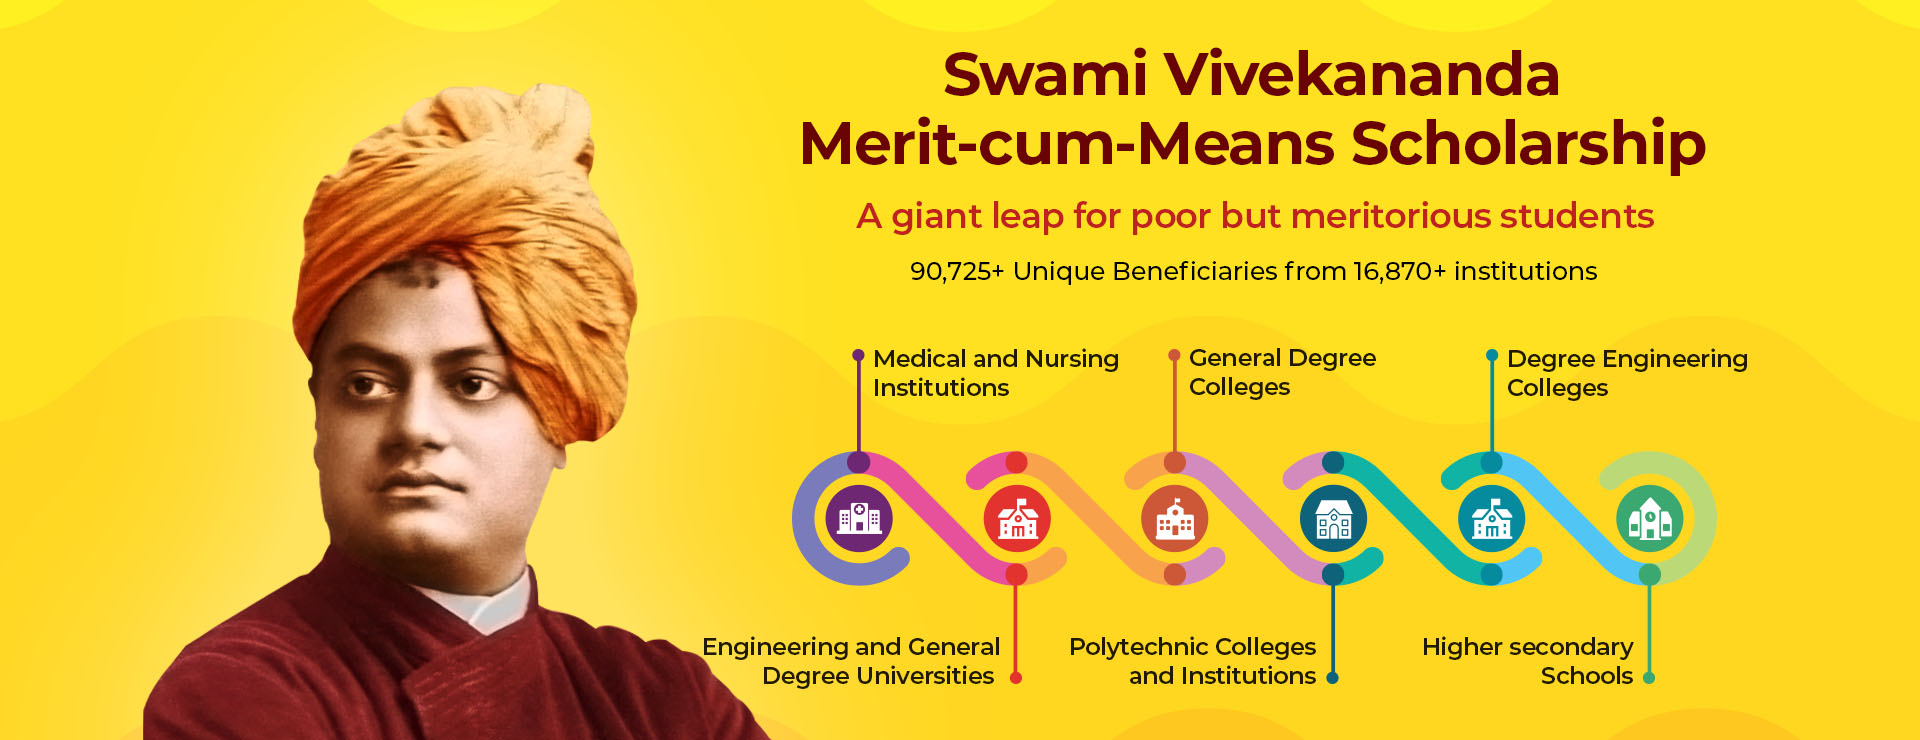 Swami Vivekananda Merit-cum-Means Scholarship